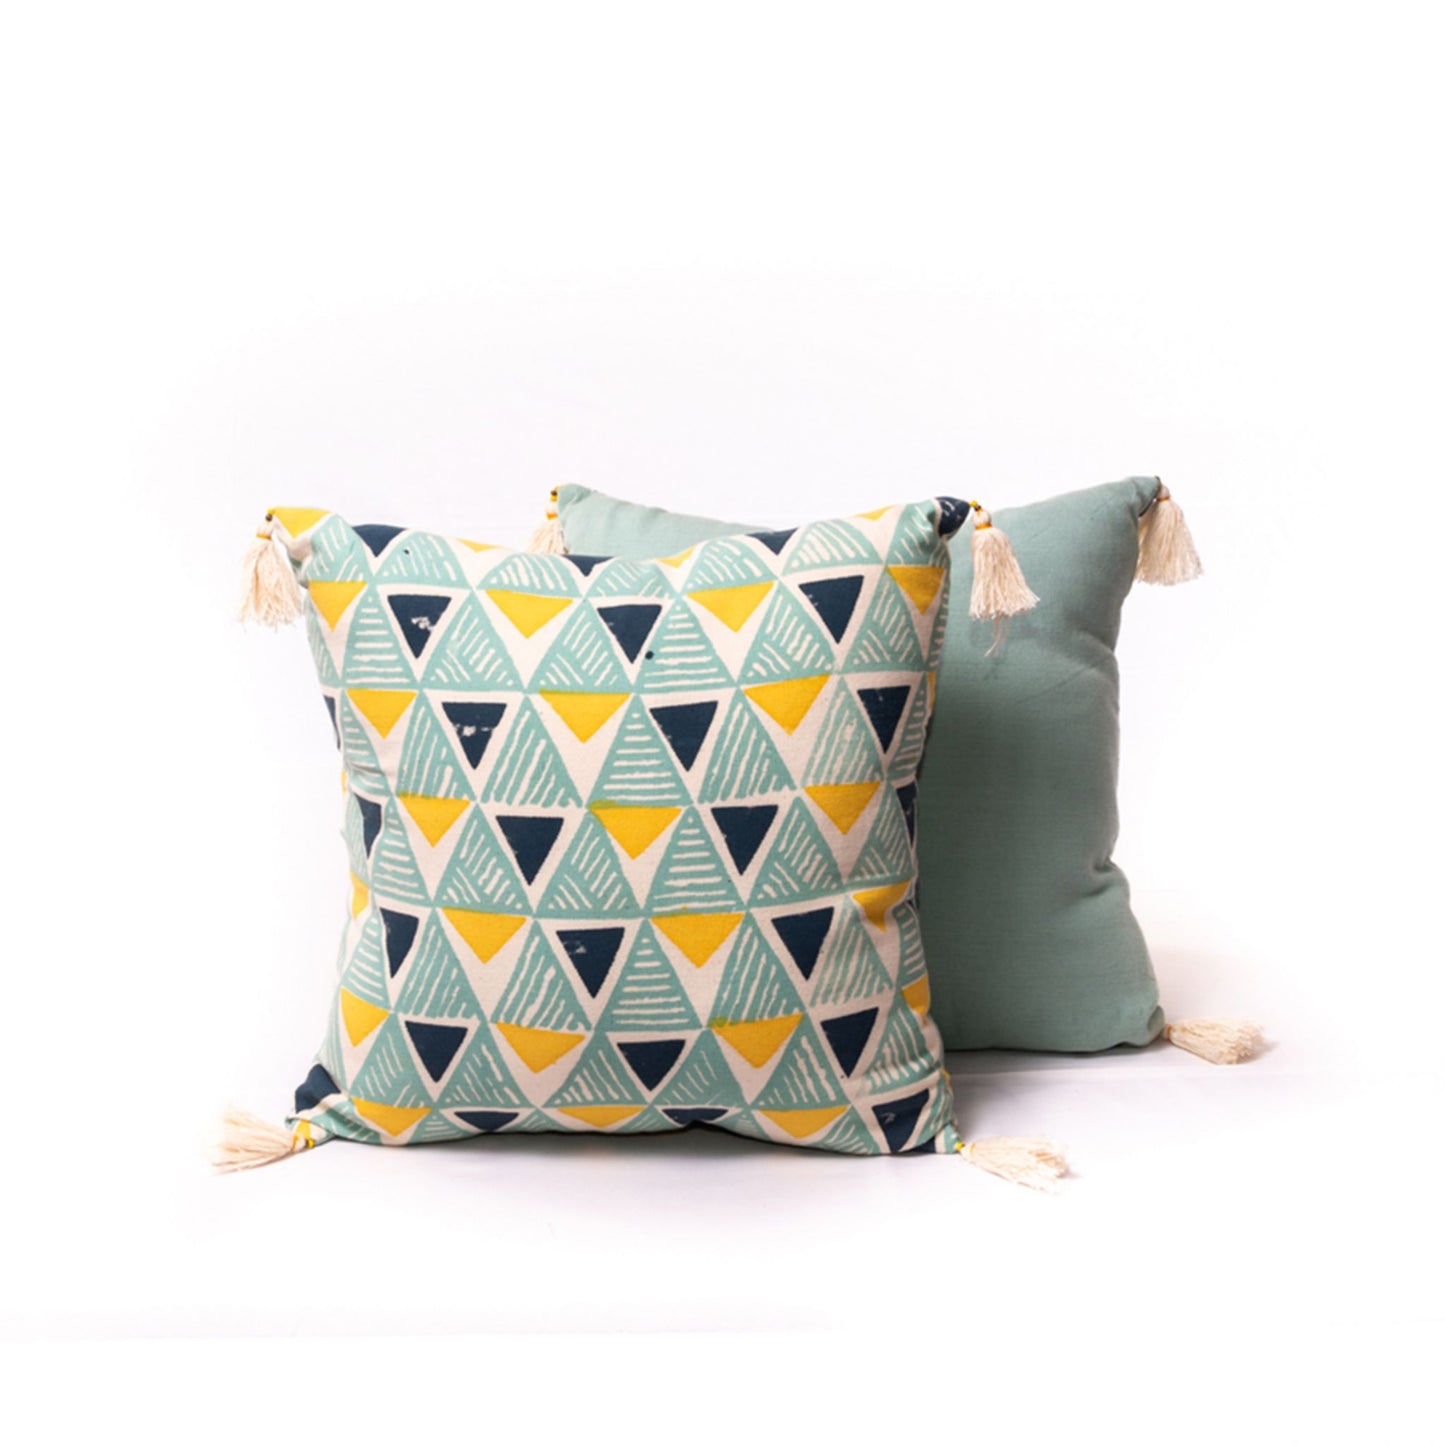 Handmade and Fair Trade Block Print Cushion - front and back